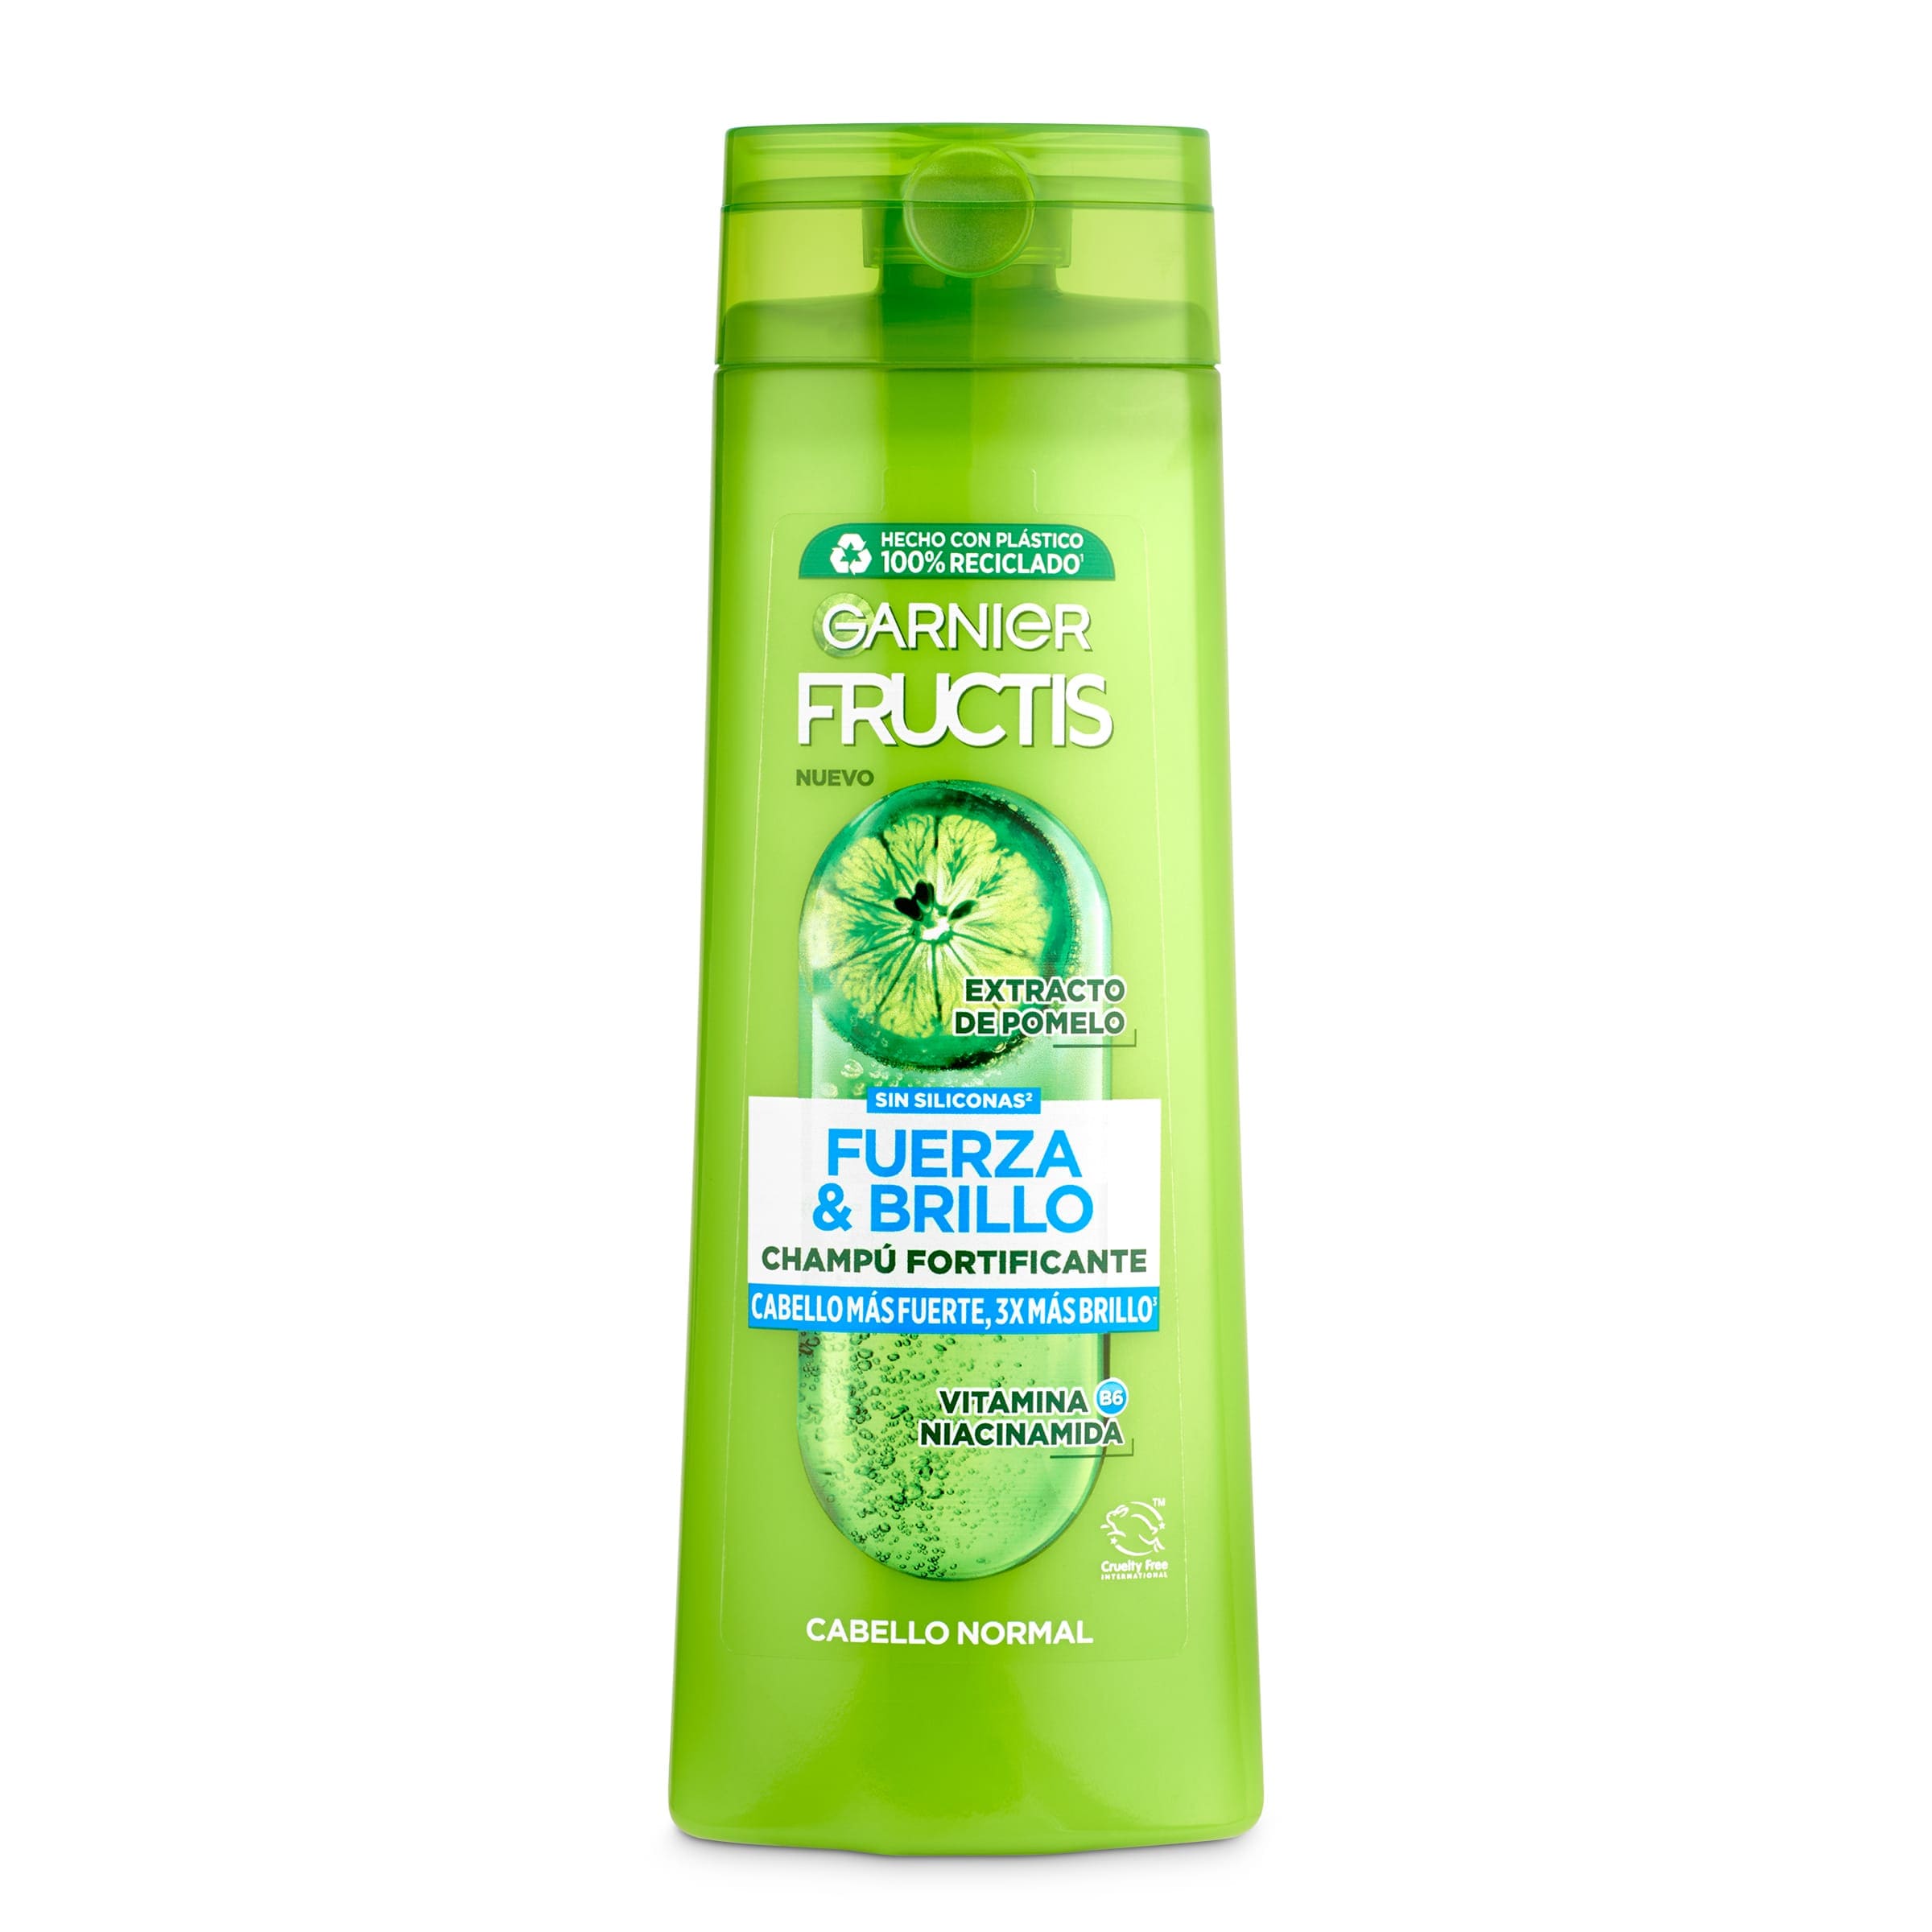 Champú fortificante fuerza y brillo cabello normal Fructis botella 300 ml -  Supermercados DIA